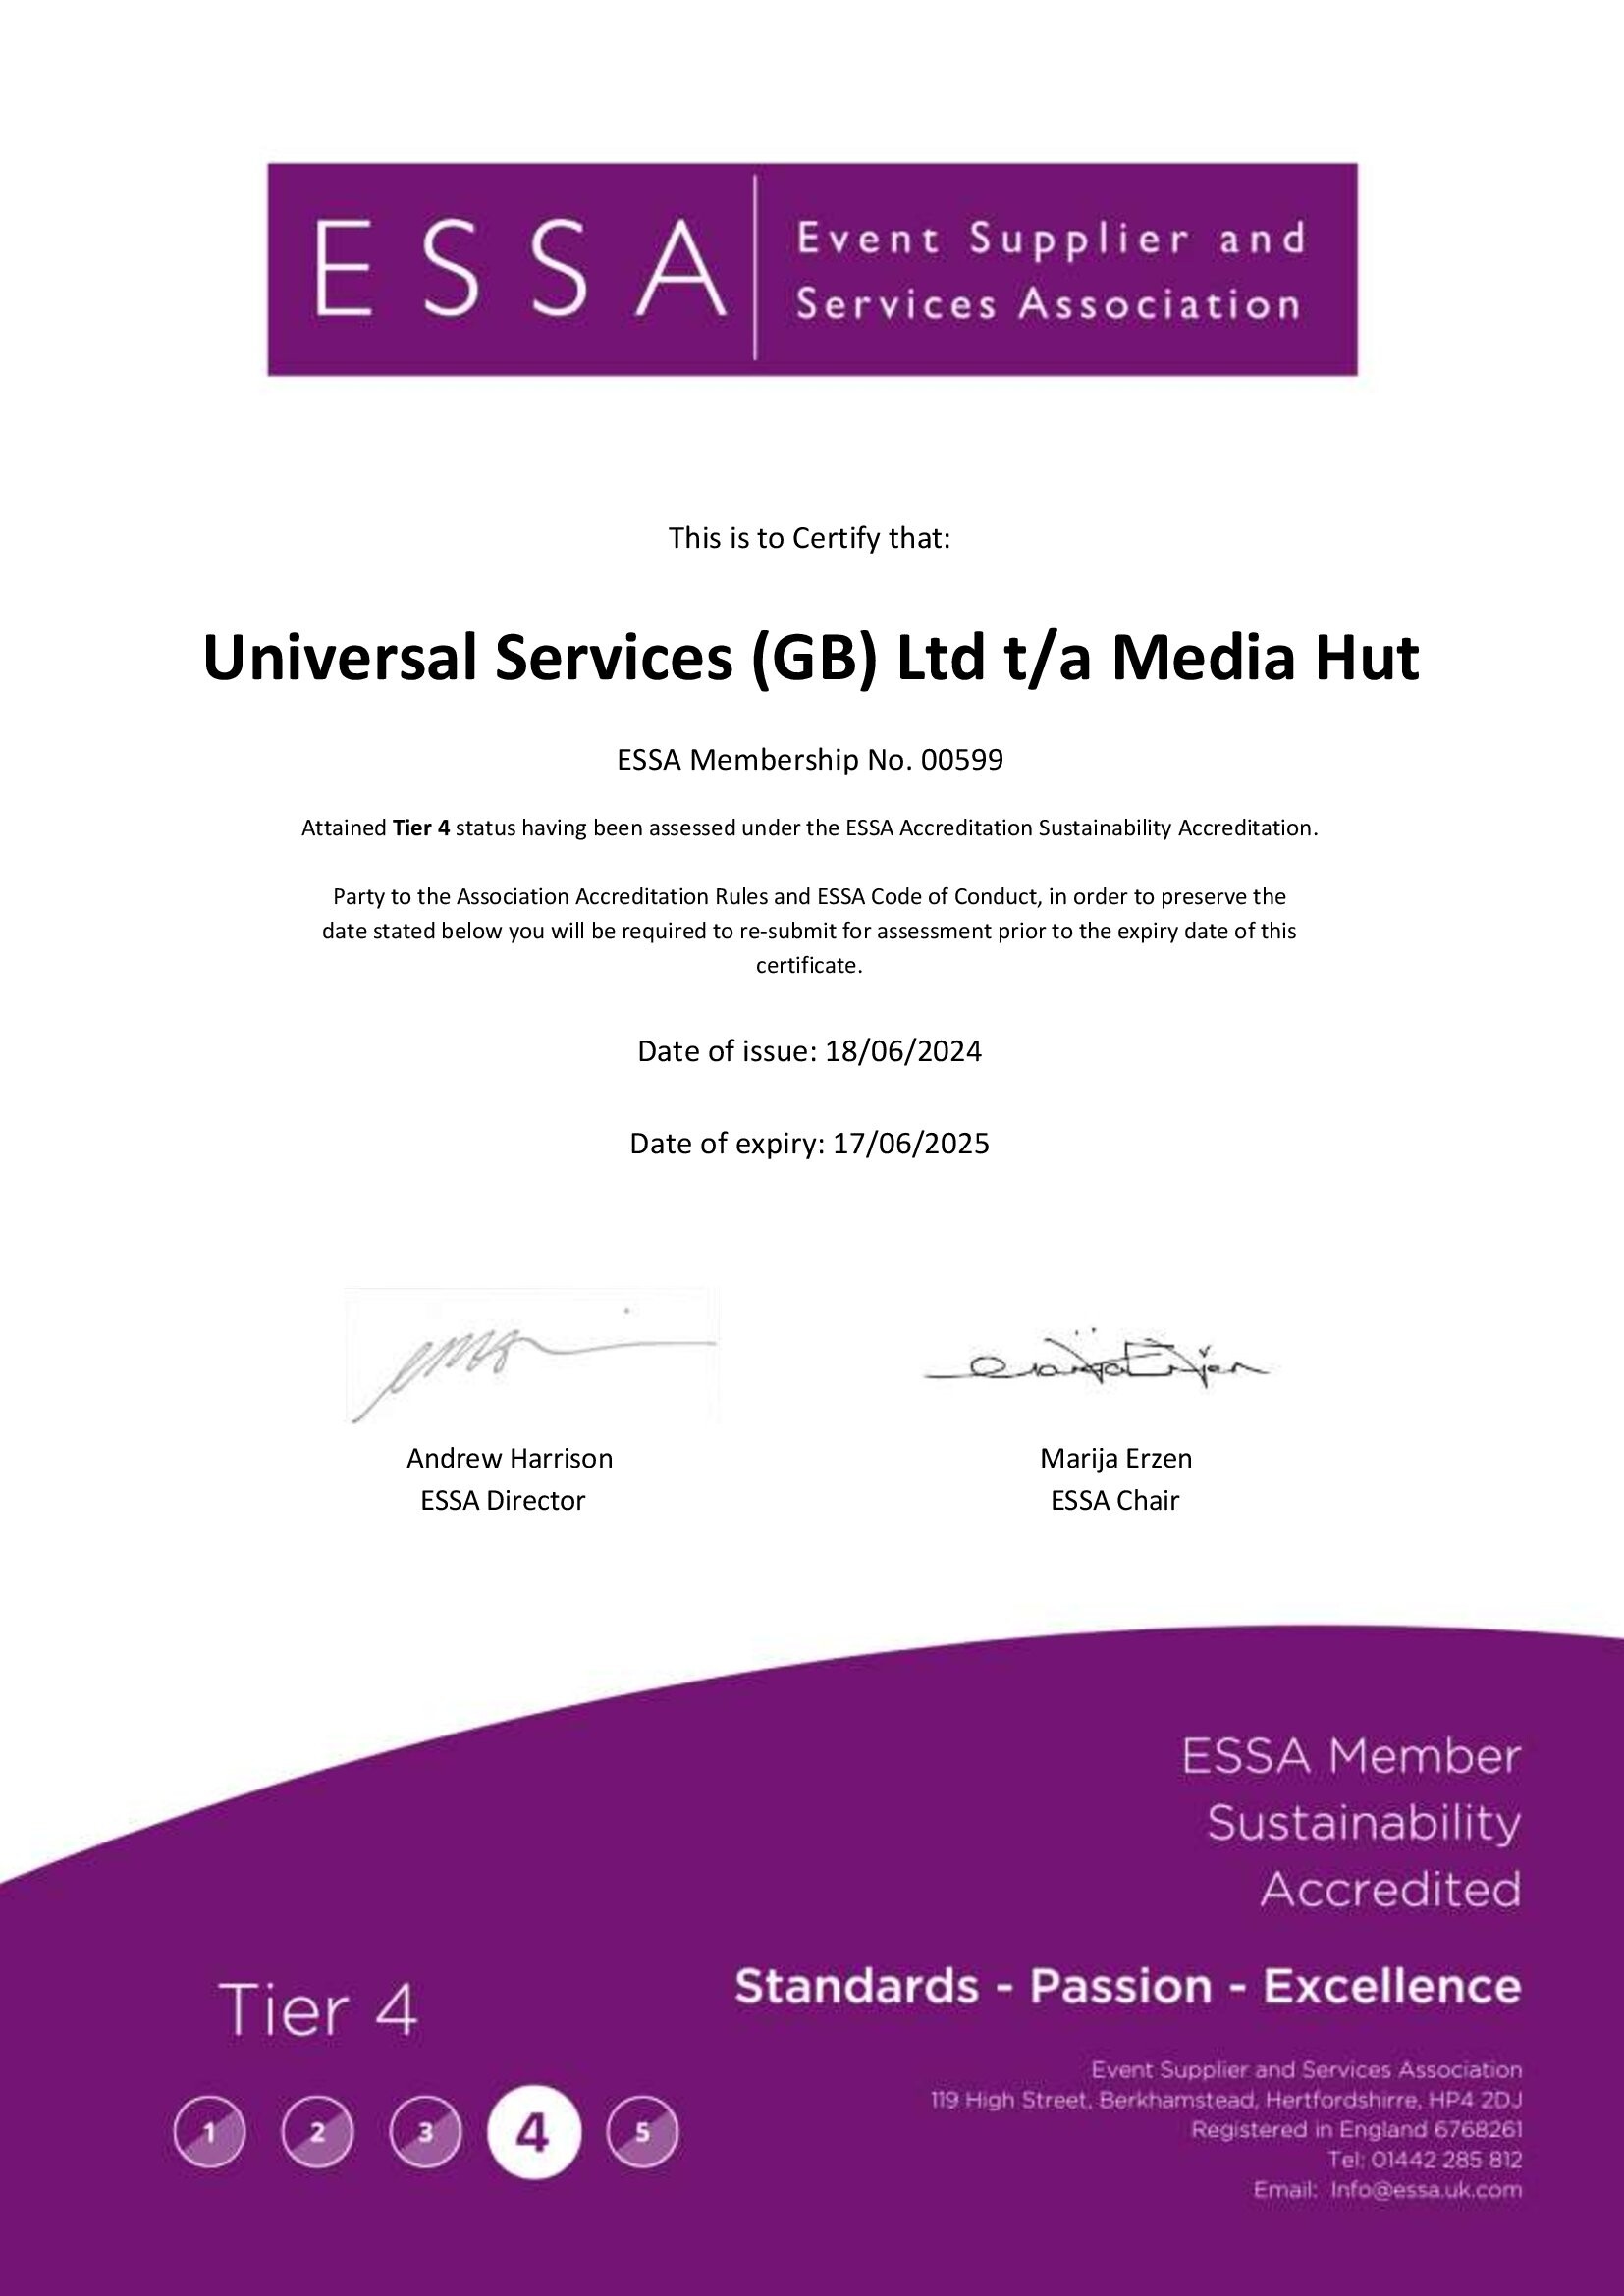 ESSA Tier 4 Sustainability Accreditation certificate